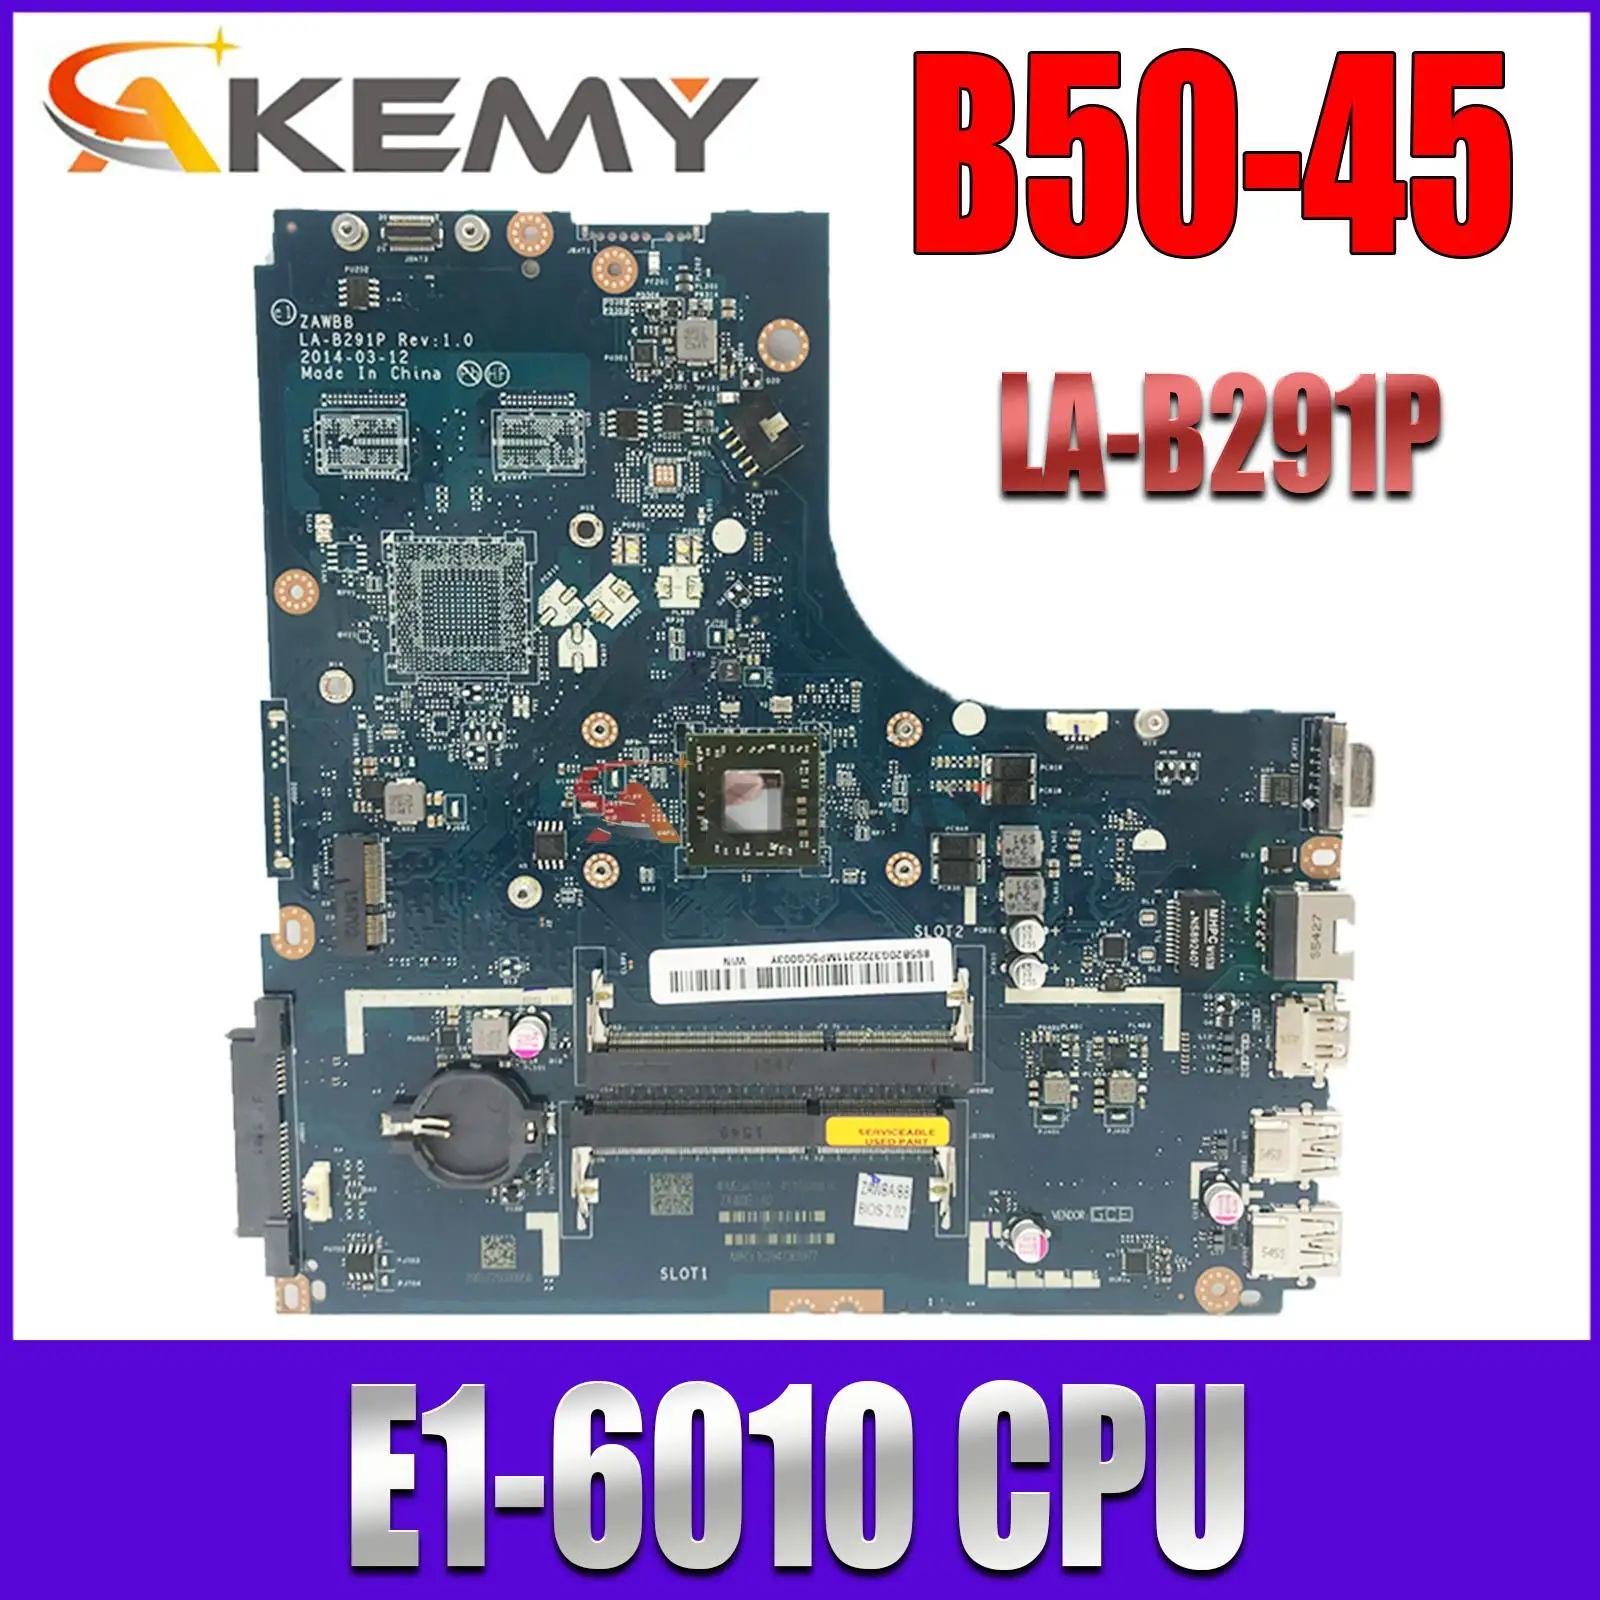 

For Lenovo Ideapad B50-45 N50-45 Laptop Motherboard ZAWBA/ZAWBB LA-B291P Mainboard With AMD E1 CPU